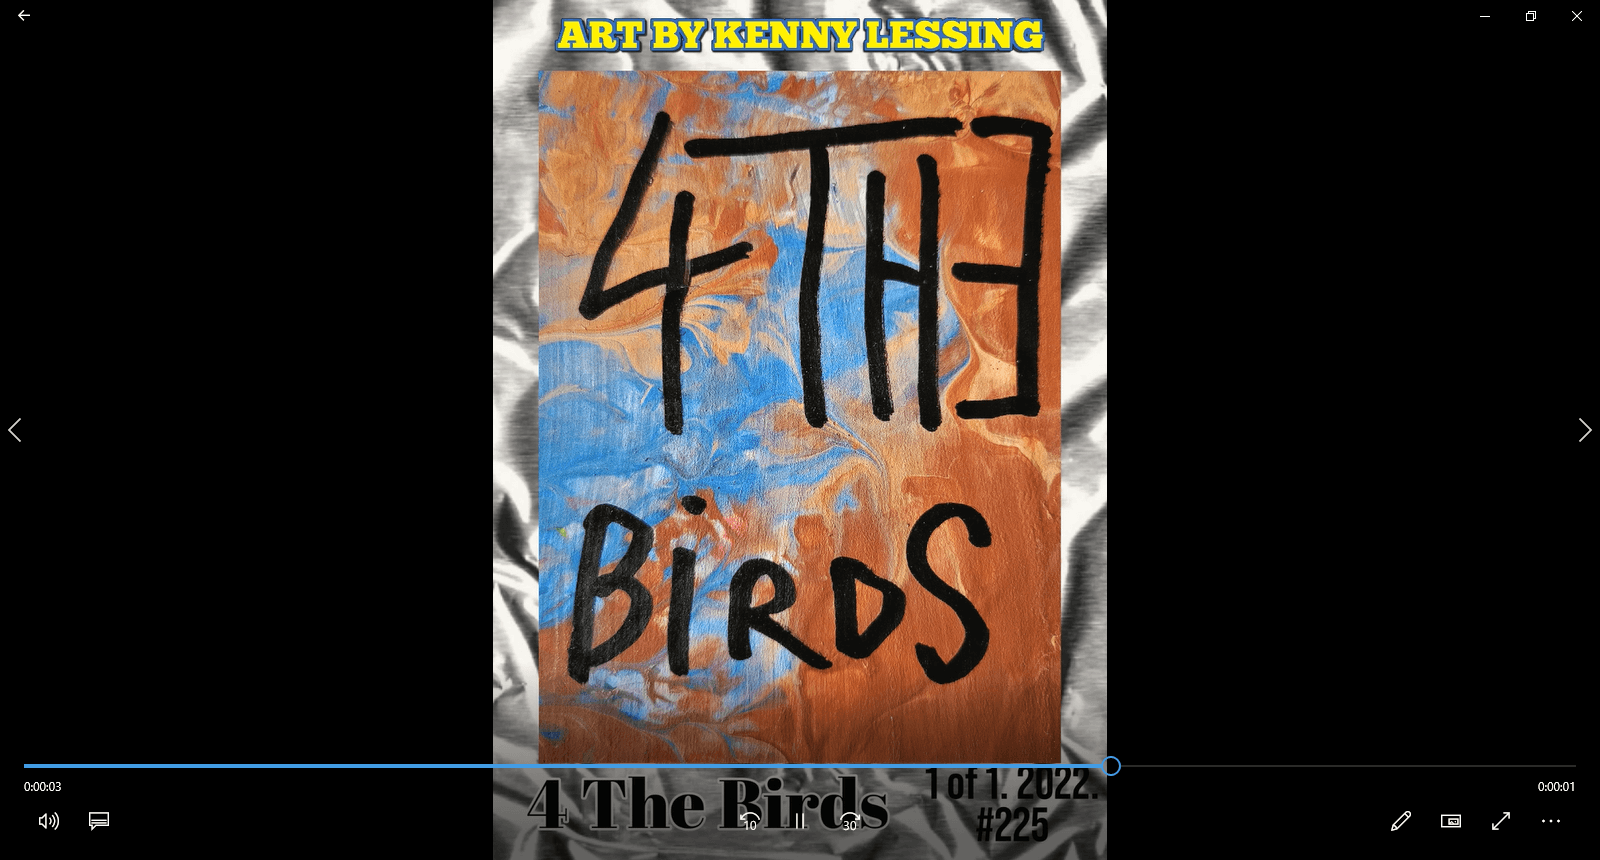 4 The Birds - 2022 #ArtByKennyLessing 1 of 1 card #225